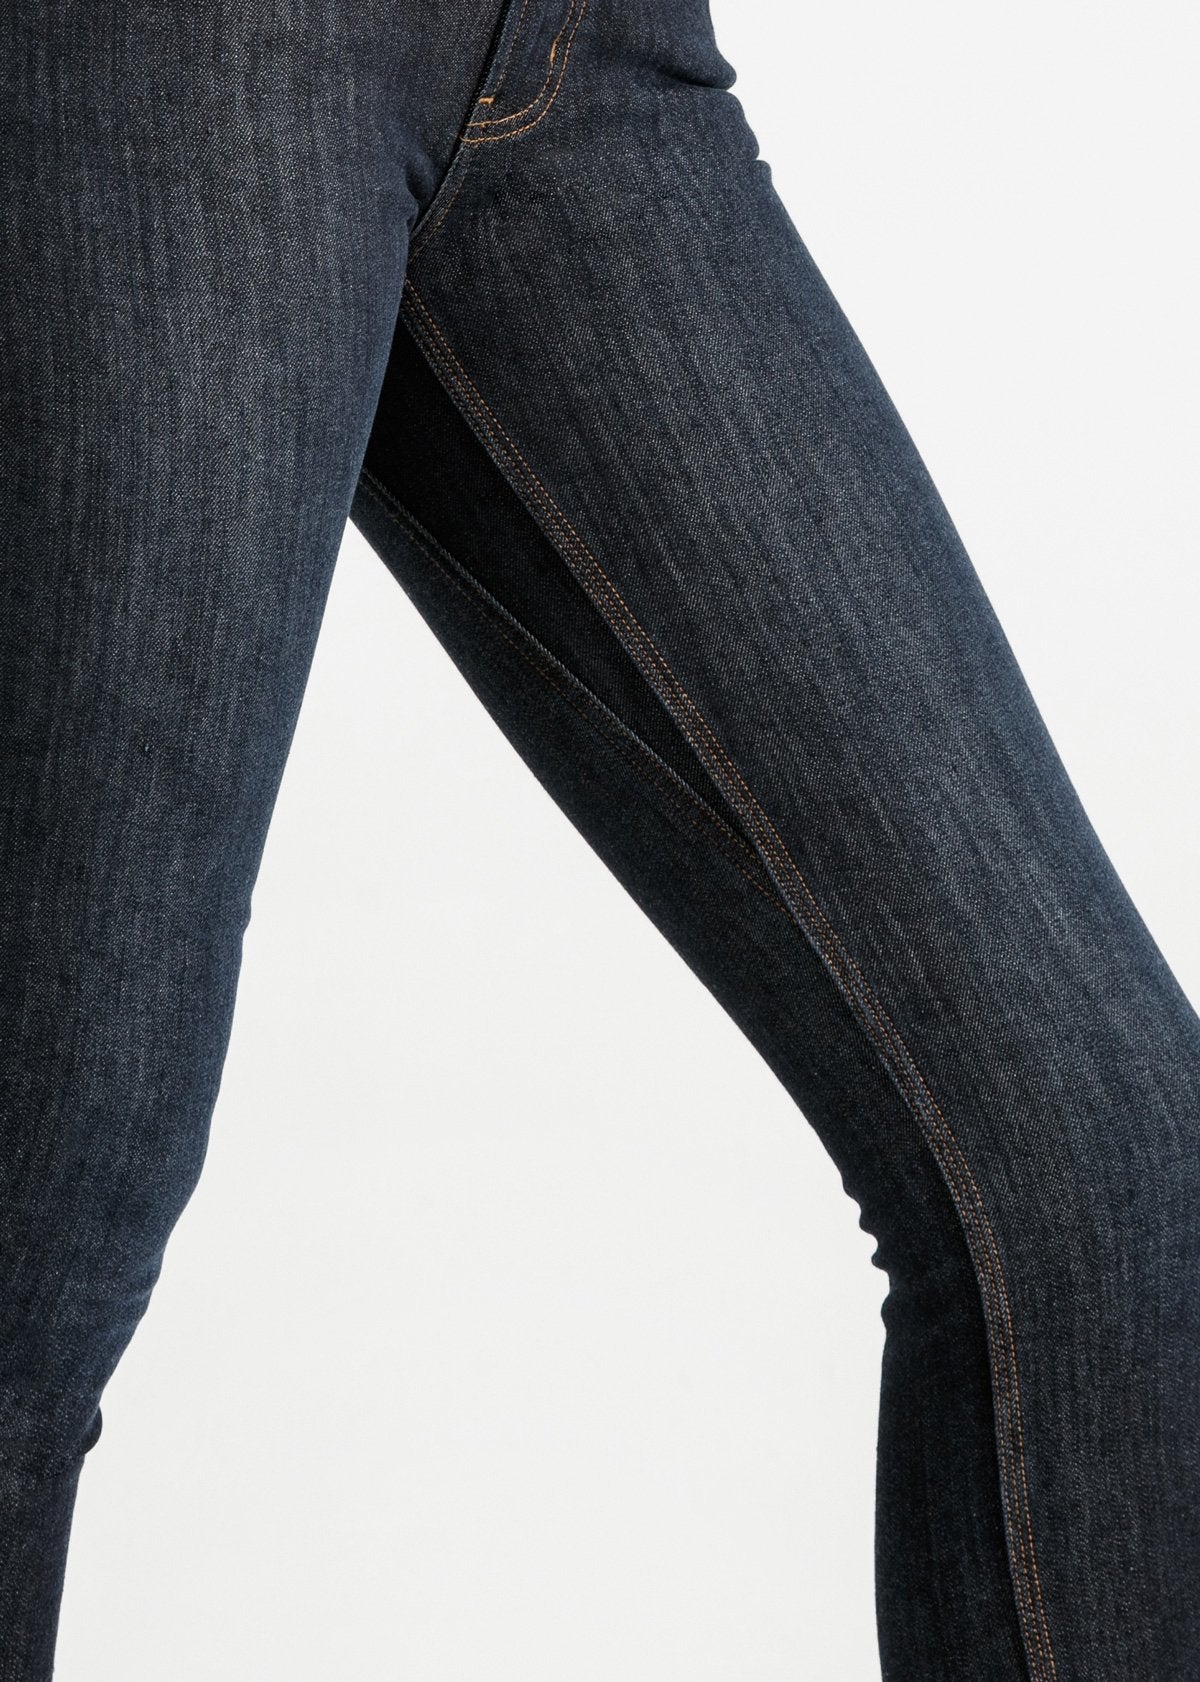 YWDJ Black Jeans for Women Womens Fleece Lined Thermal Winter High